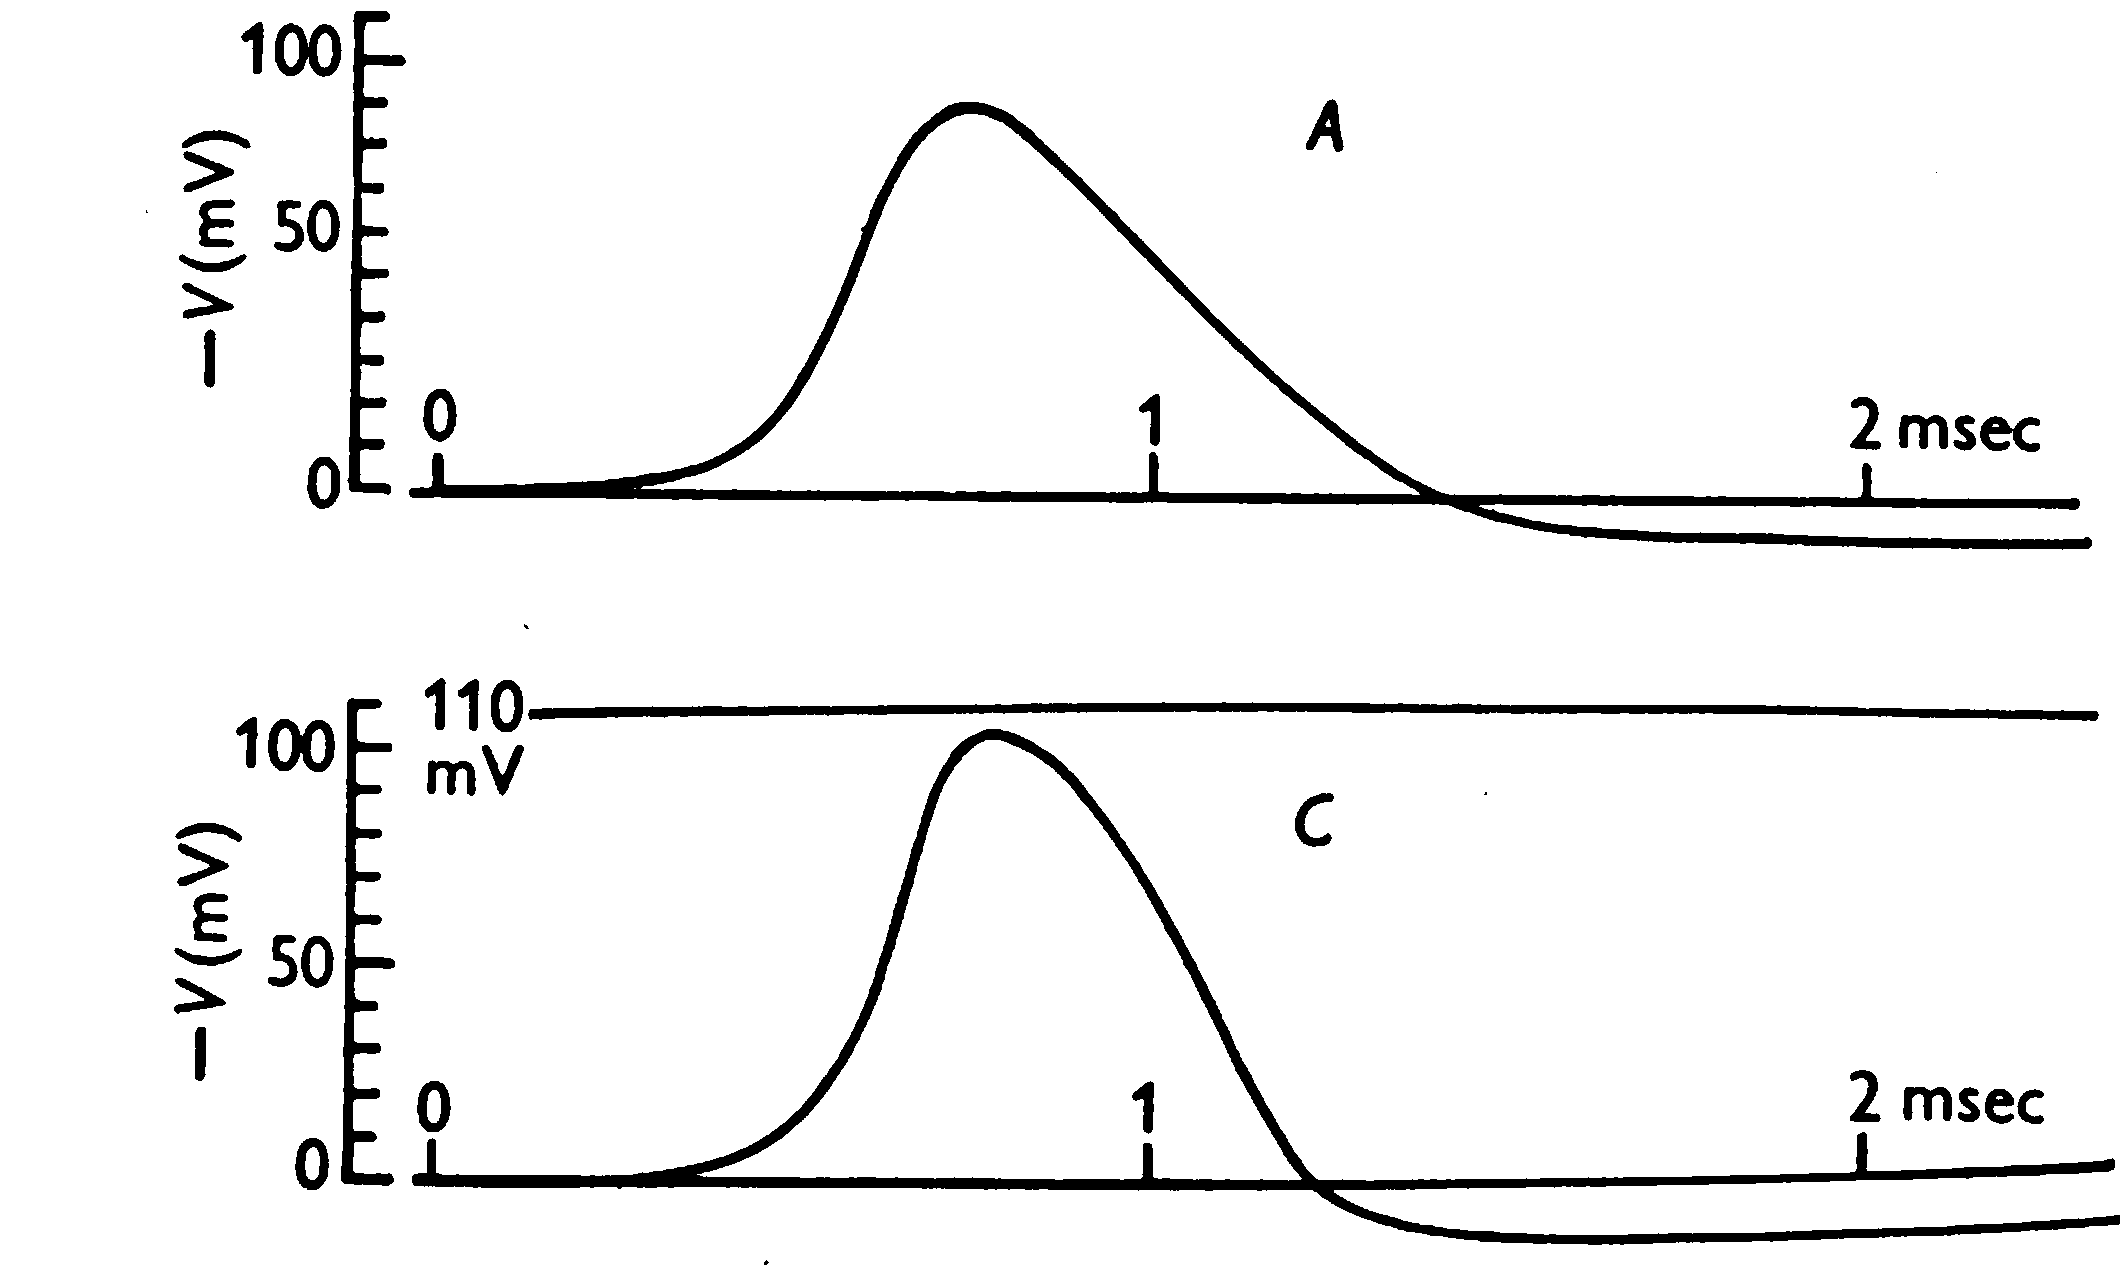 Figure 3: Action potentials across the membrane